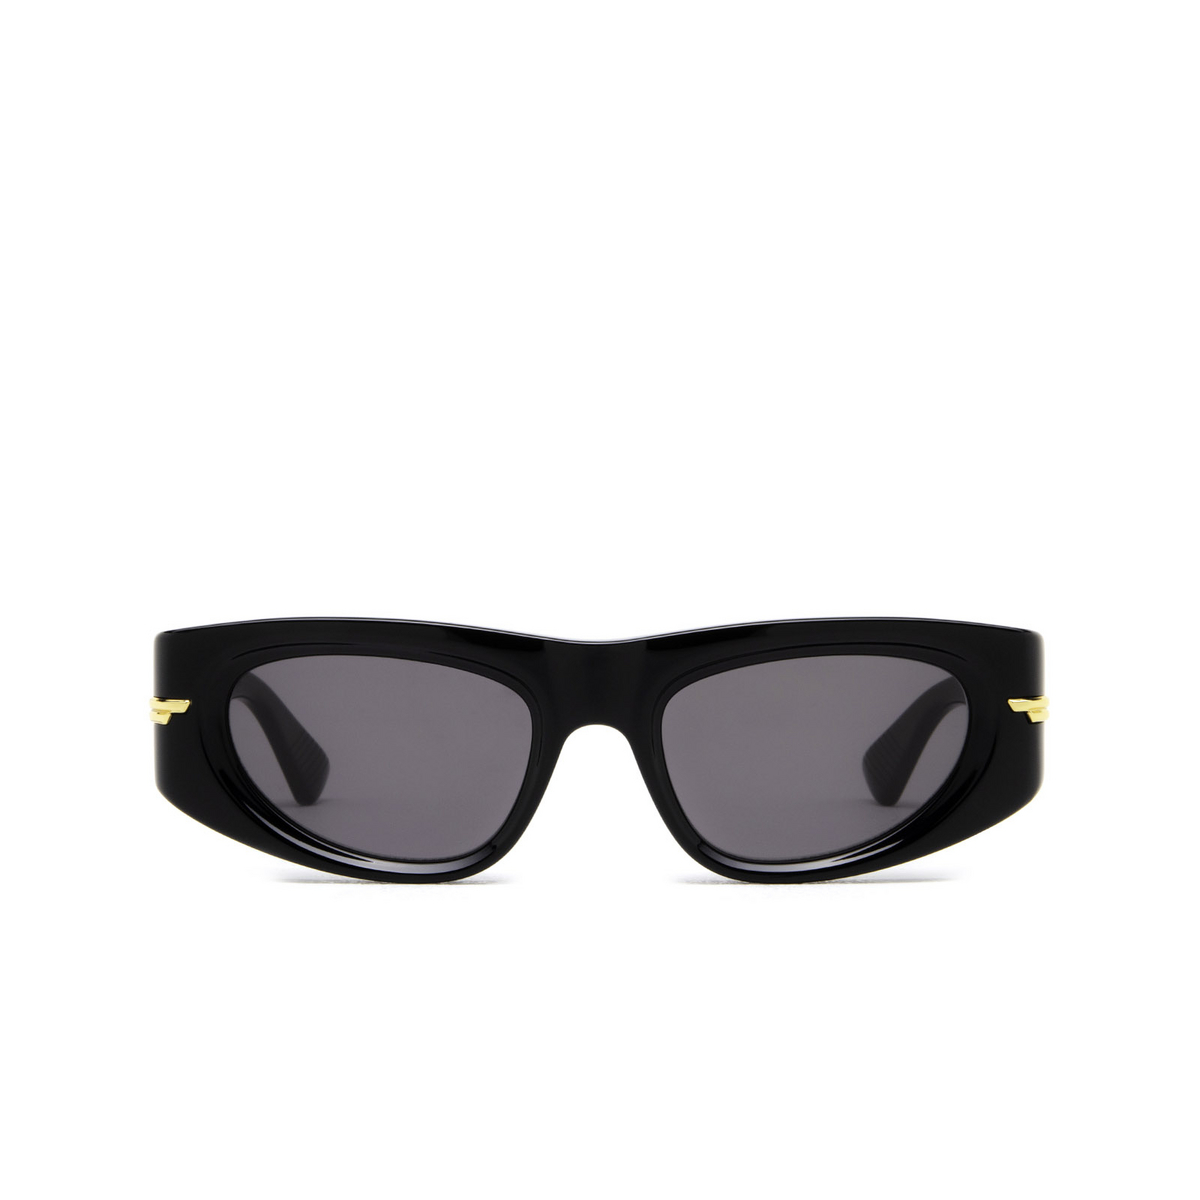 Bottega Veneta® Rectangle Sunglasses: BV1144S color Black 001 - front view.